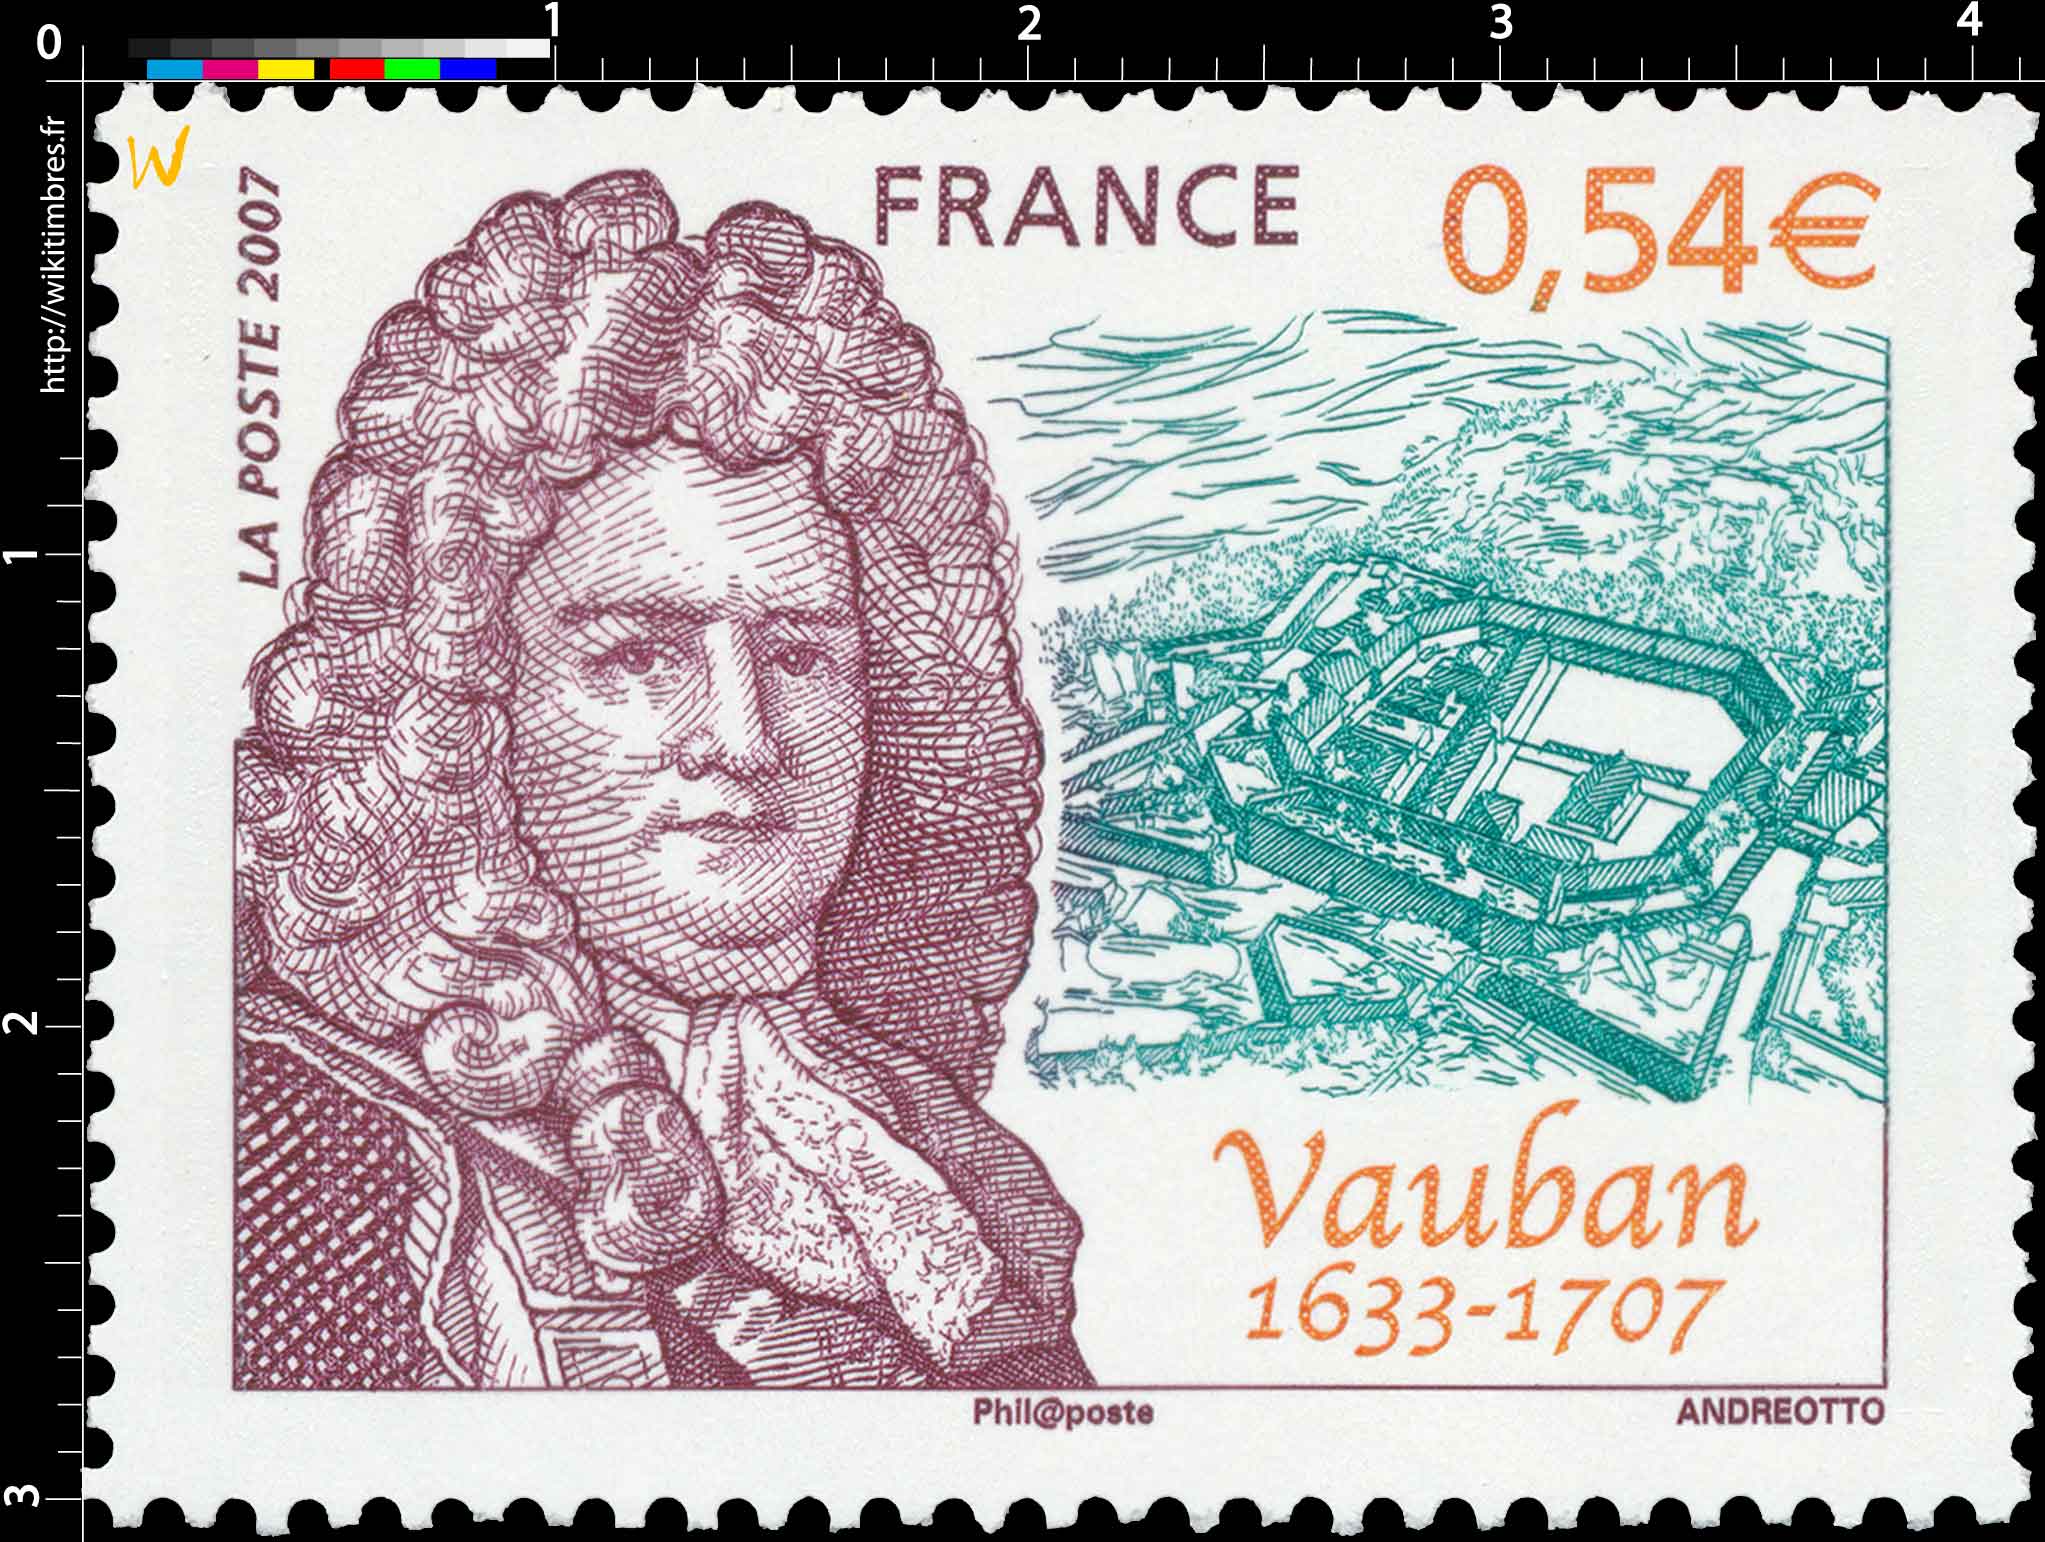 2007 Vauban 1633-1707